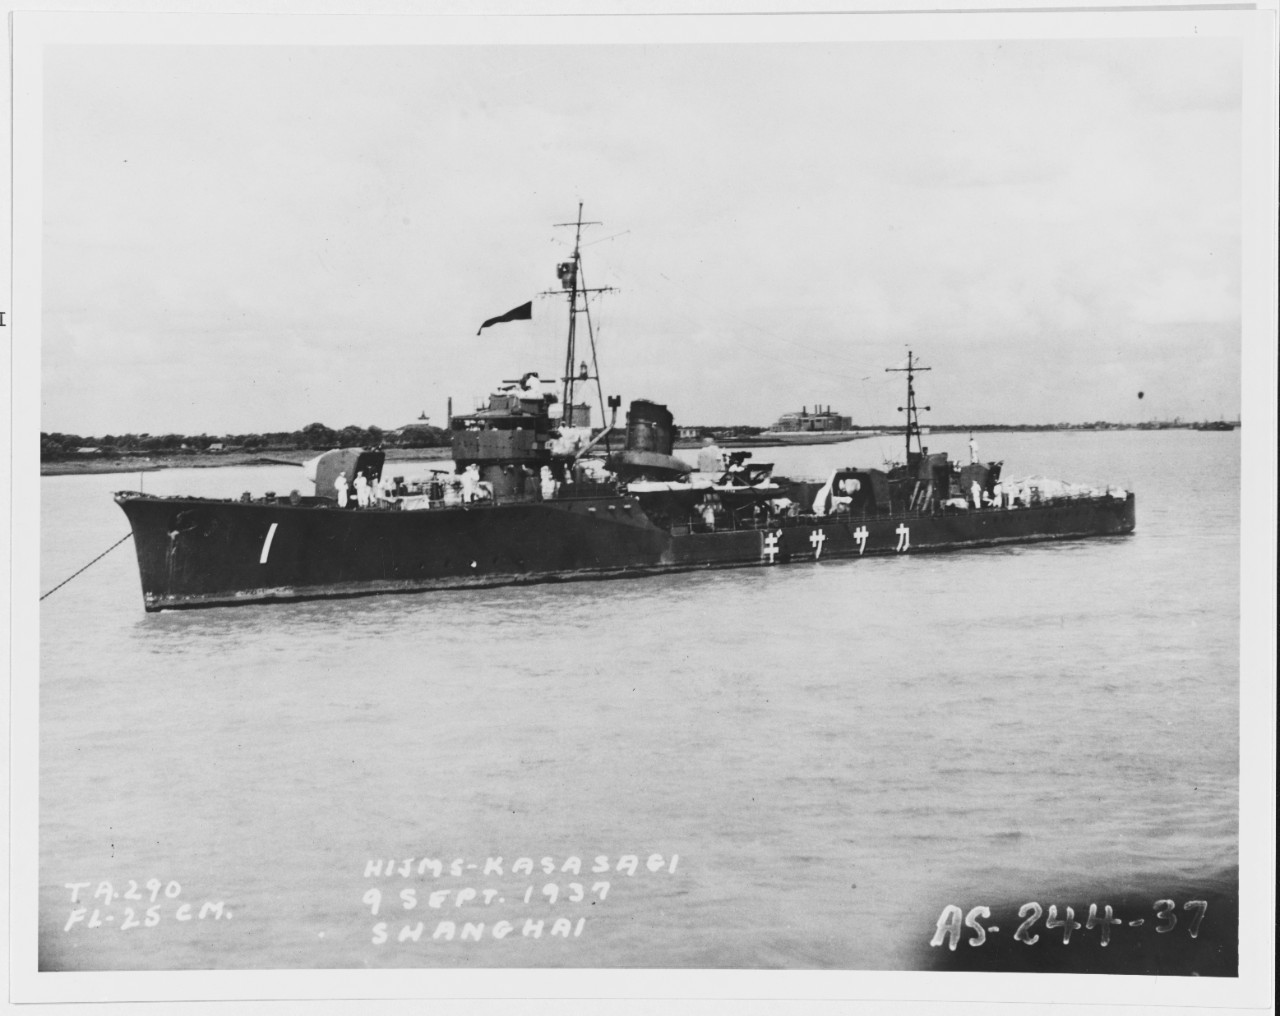 KASASAGI (Japanese Torpedo Boat)